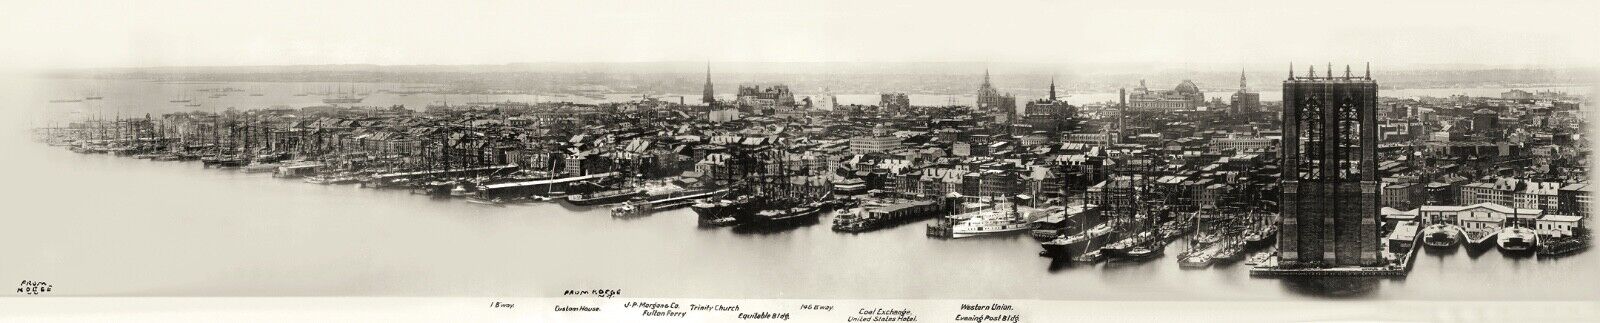 Panoramic of View Of New York from The Brooklyn Bridge - Joshua Beal circa 1876